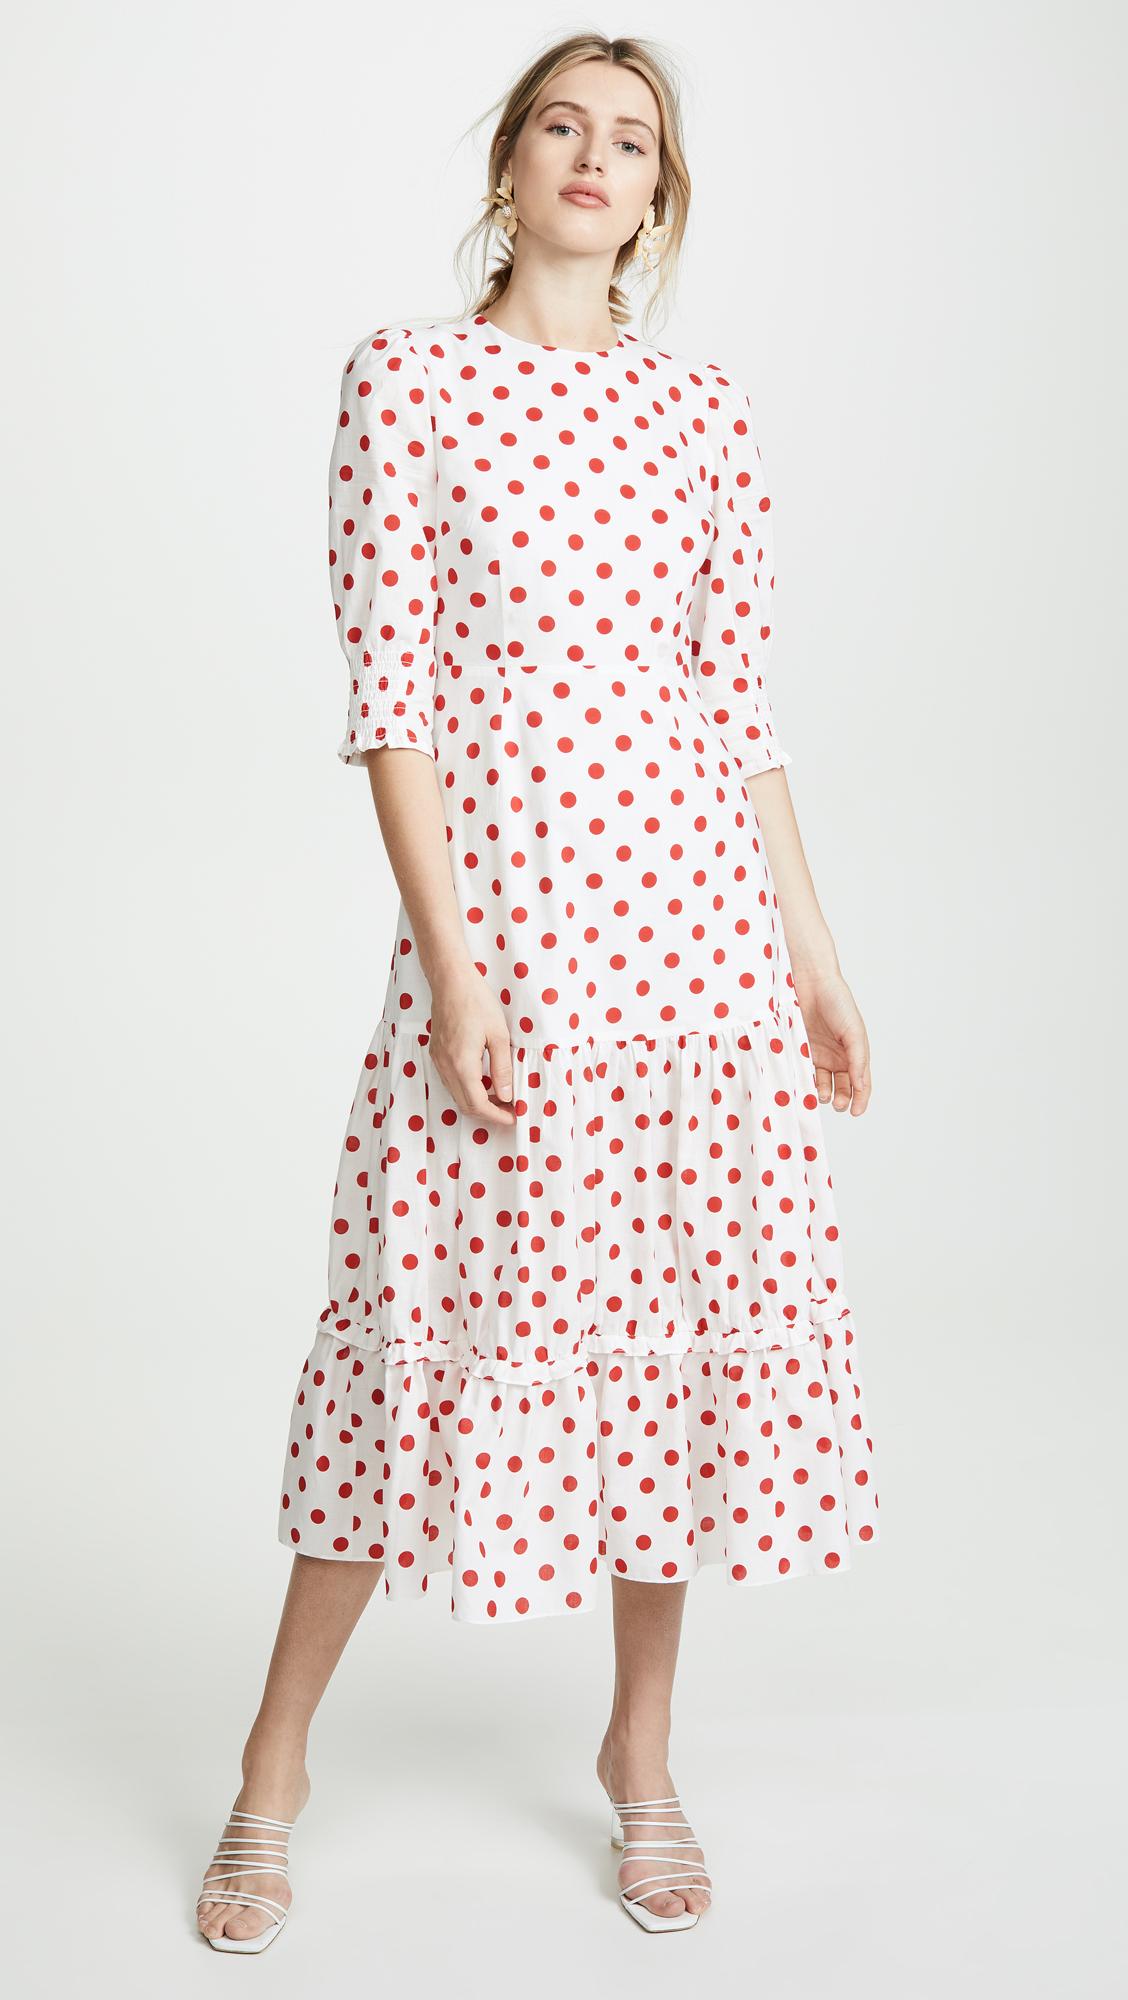 RIXO London Cotton Matilda Dress in Polka Dot White/Red (White) - Lyst